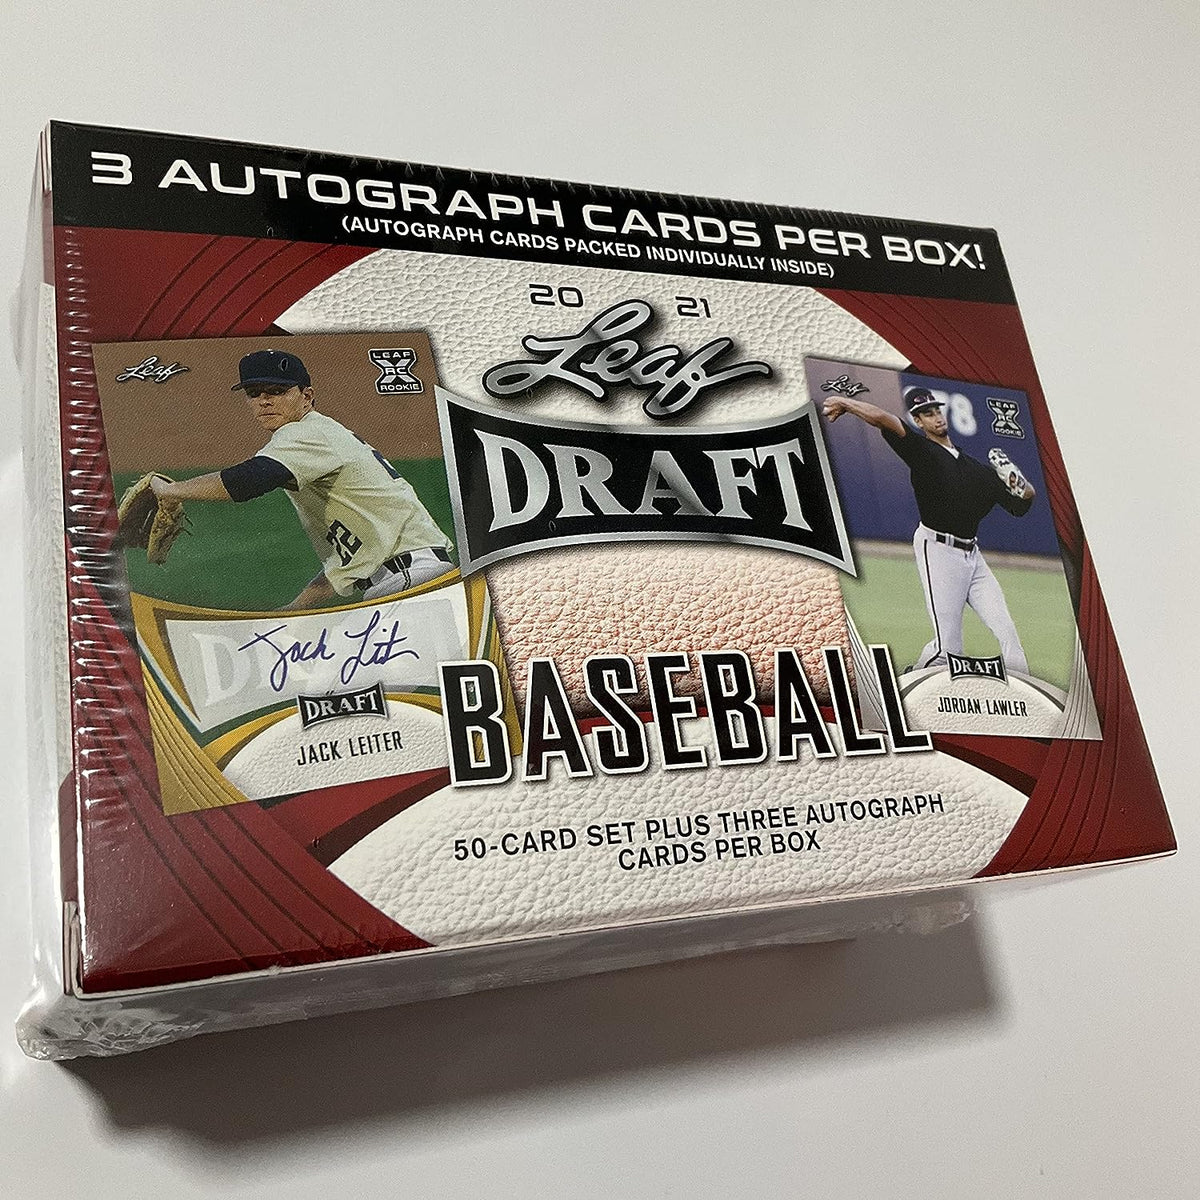 2021 Leaf Draft Baseball Hobby Blaster Box - 50 Card Set Plus 3 Autograph Cards per Box